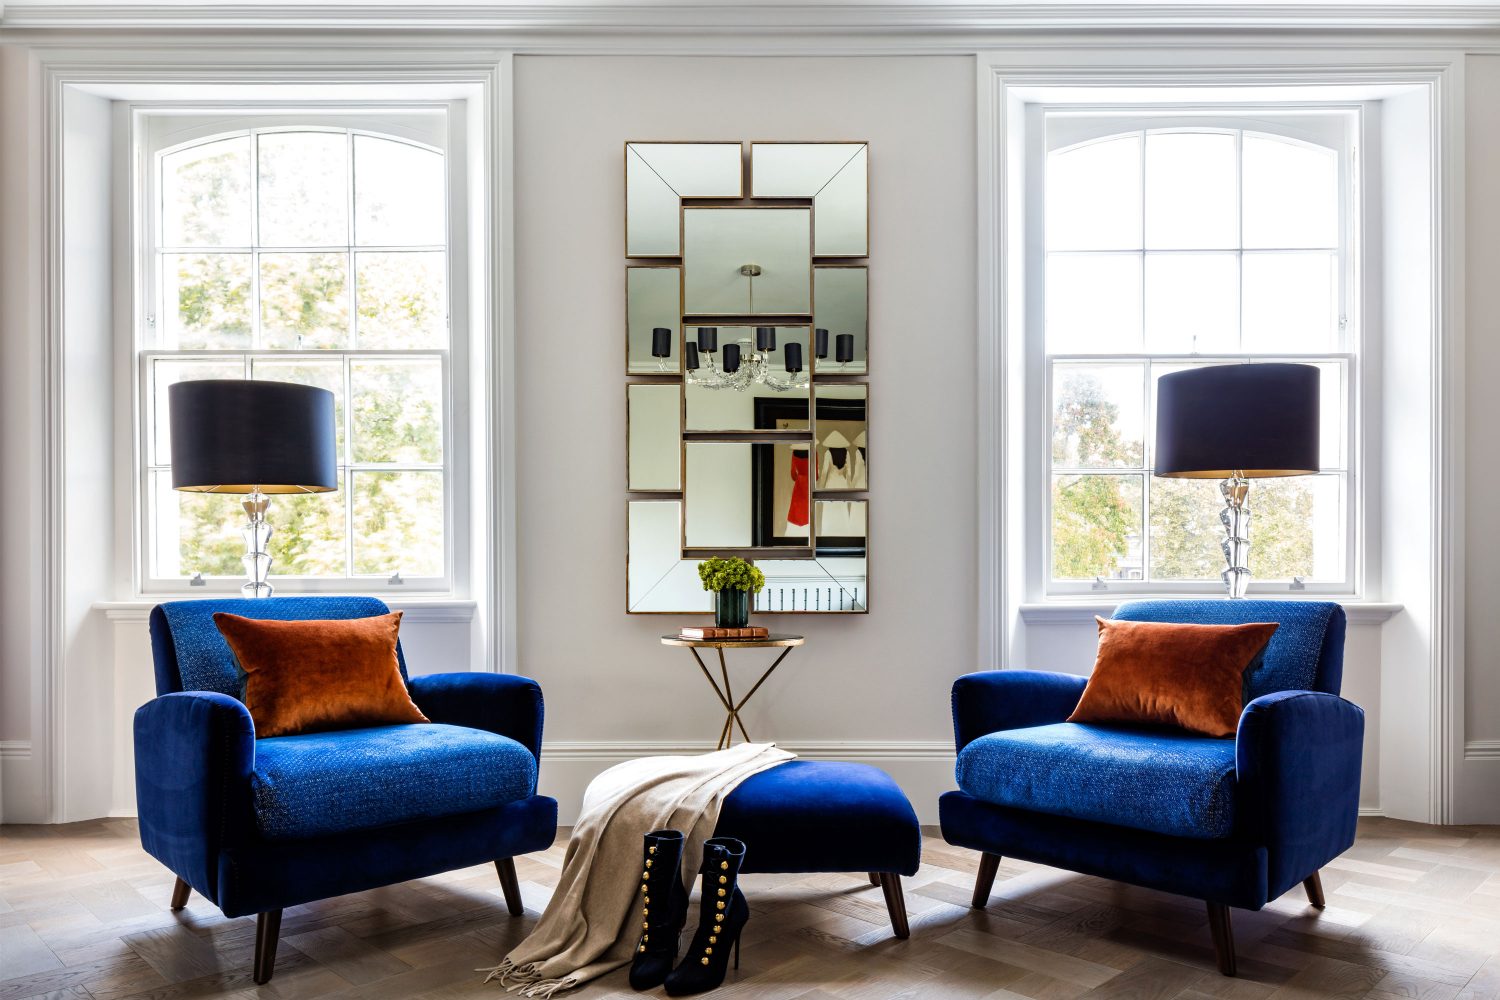 British Reserve by Daniel Hopwood – reading corner with blue detail. Interior designer Kensington